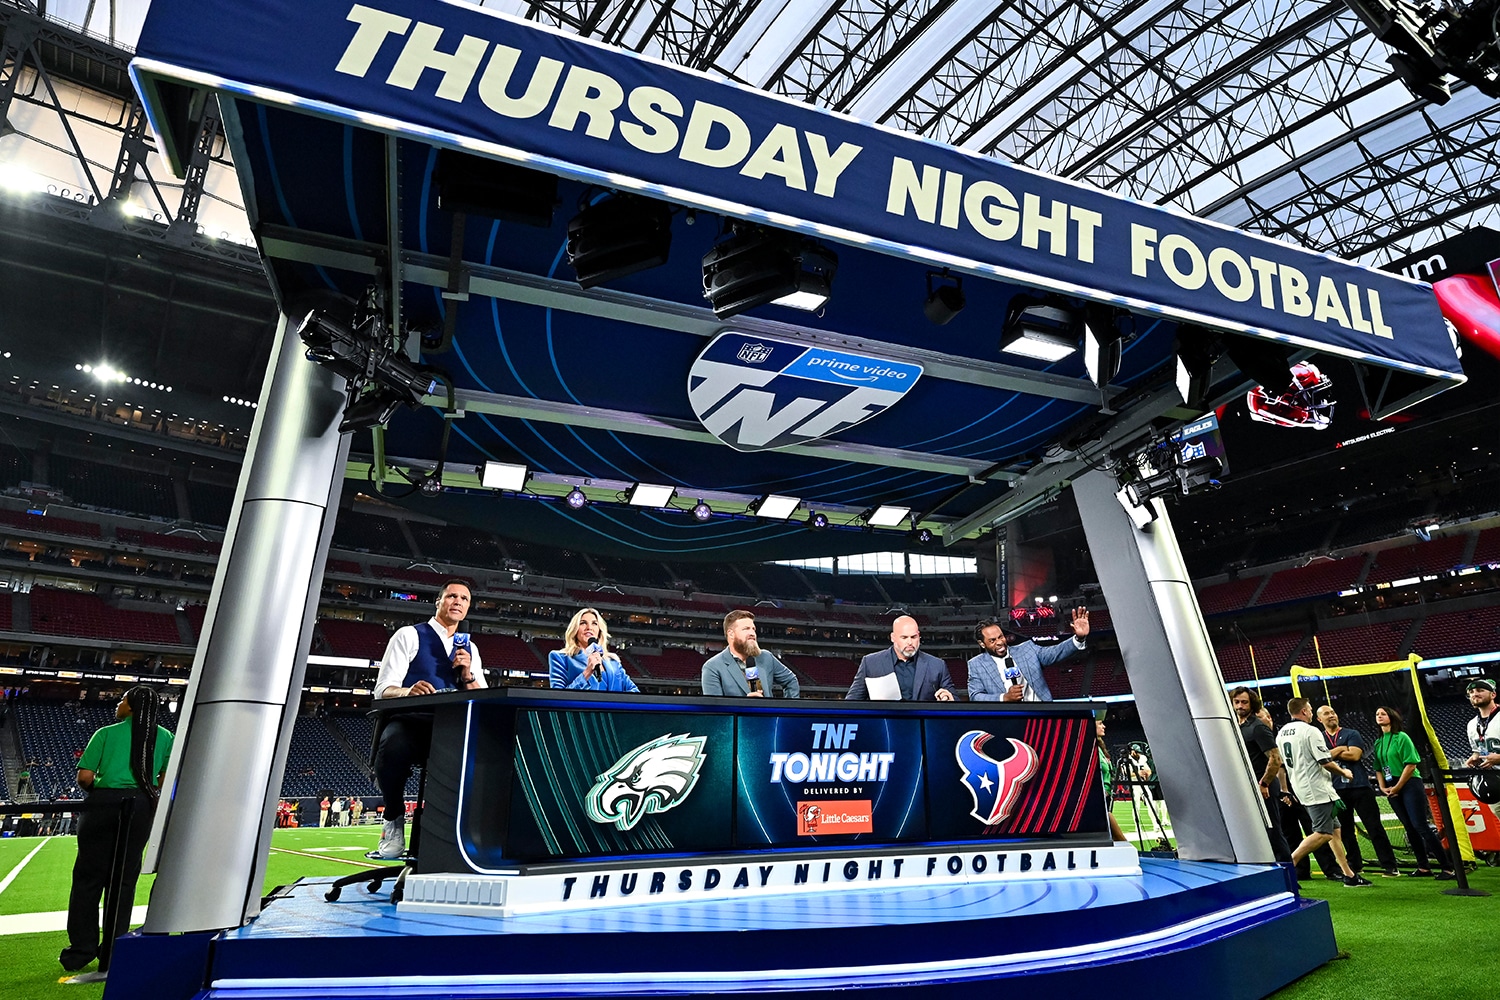 Prime deals for 'Thursday Night Football' fans